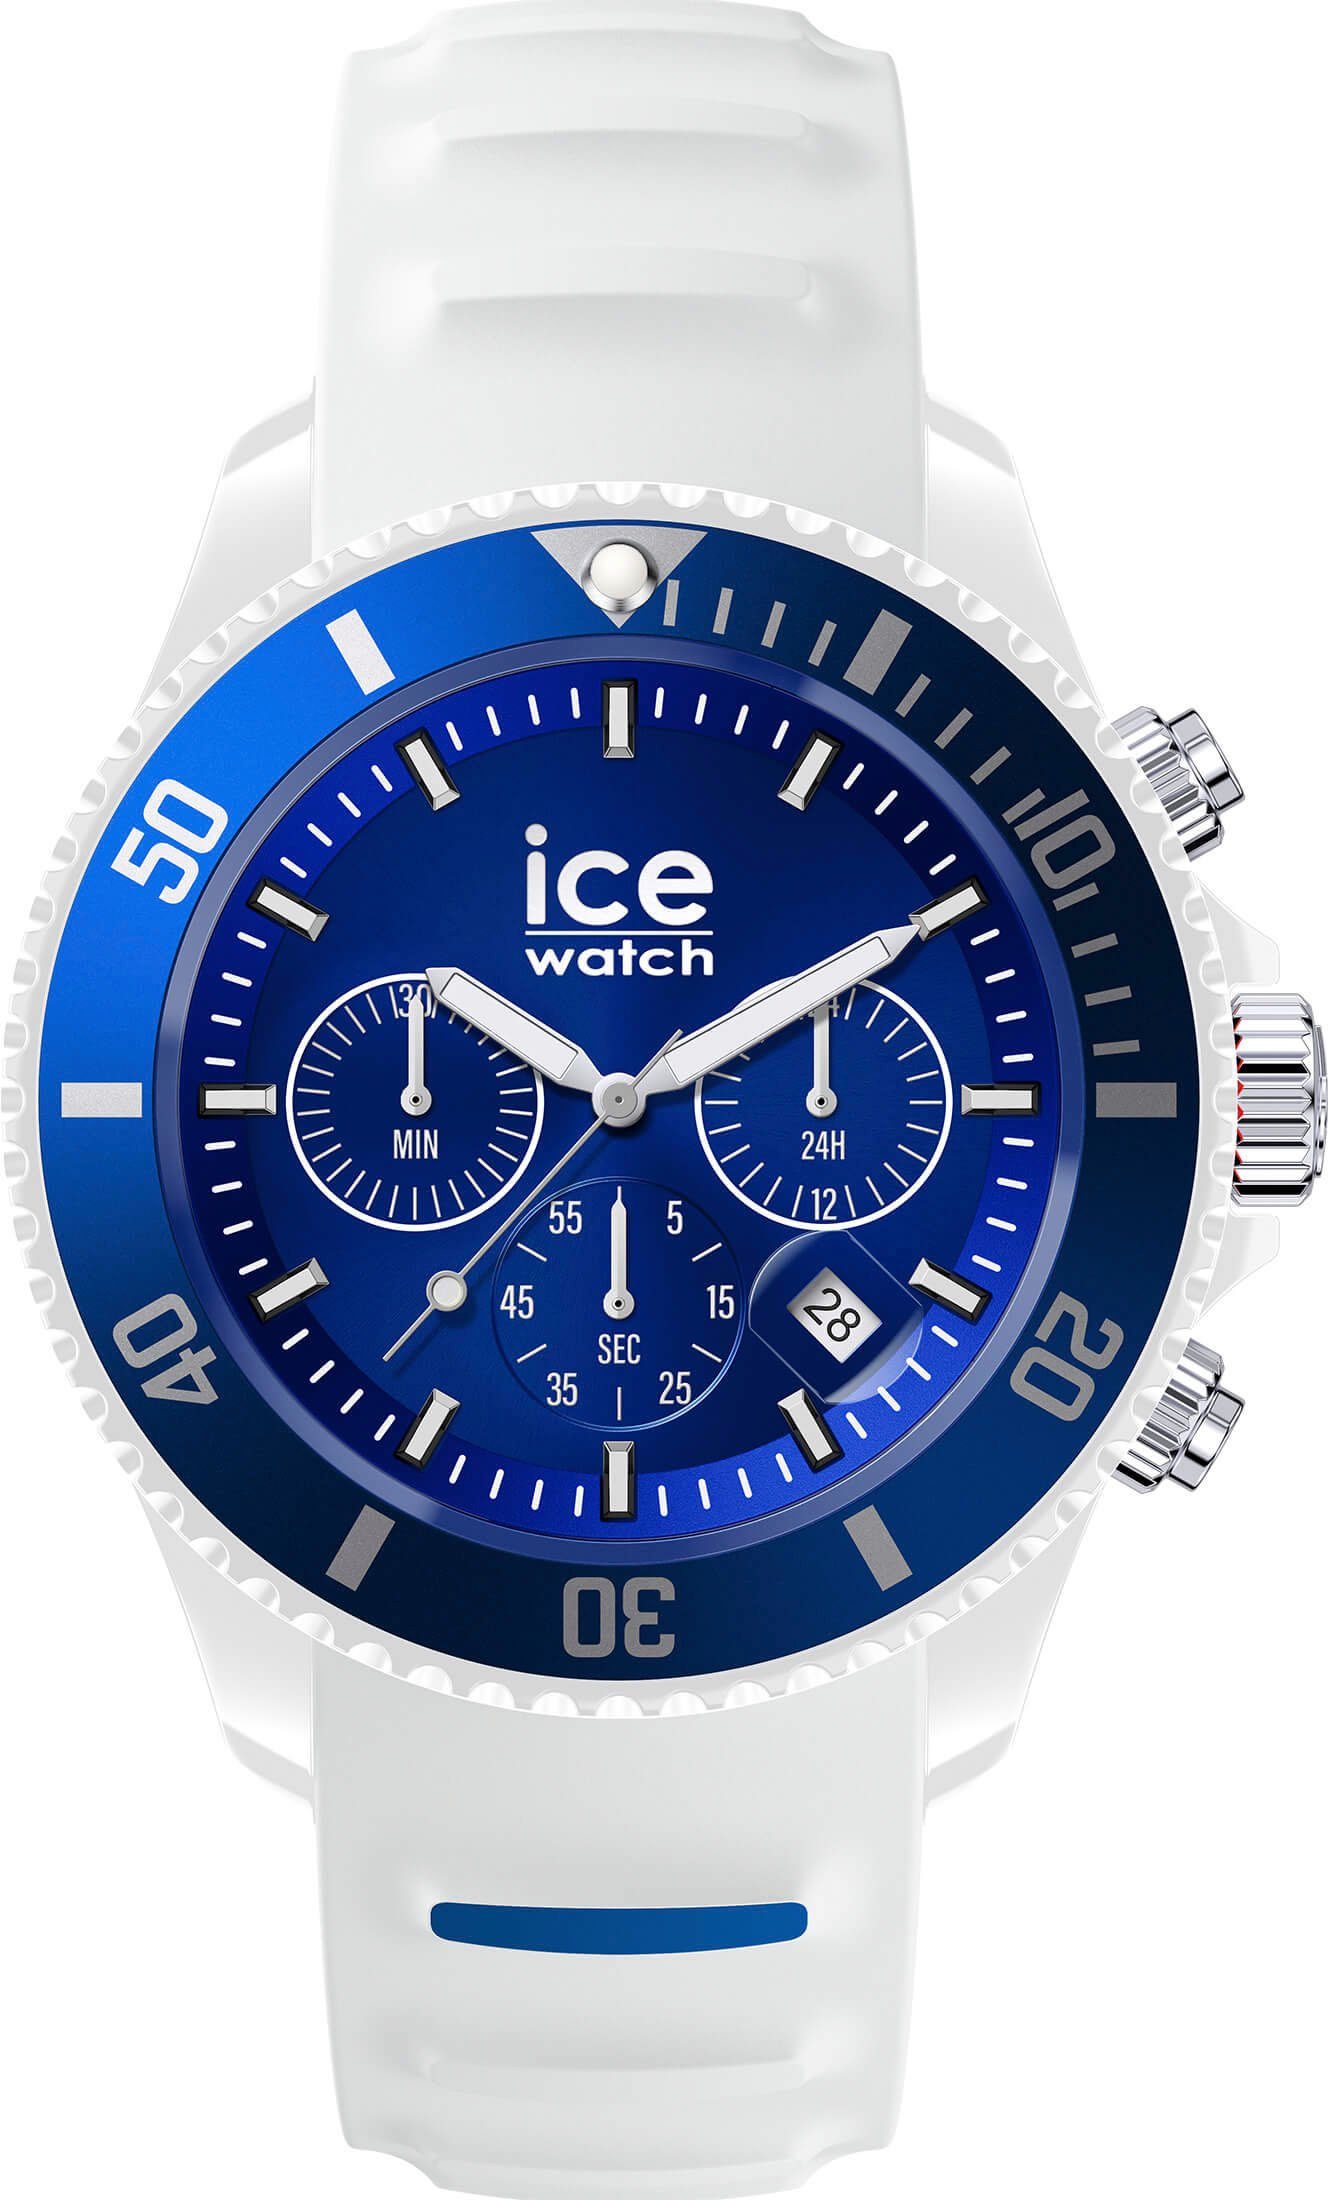 chrono CH, - - 021424 ice-watch ICE - Medium Chronograph White blue